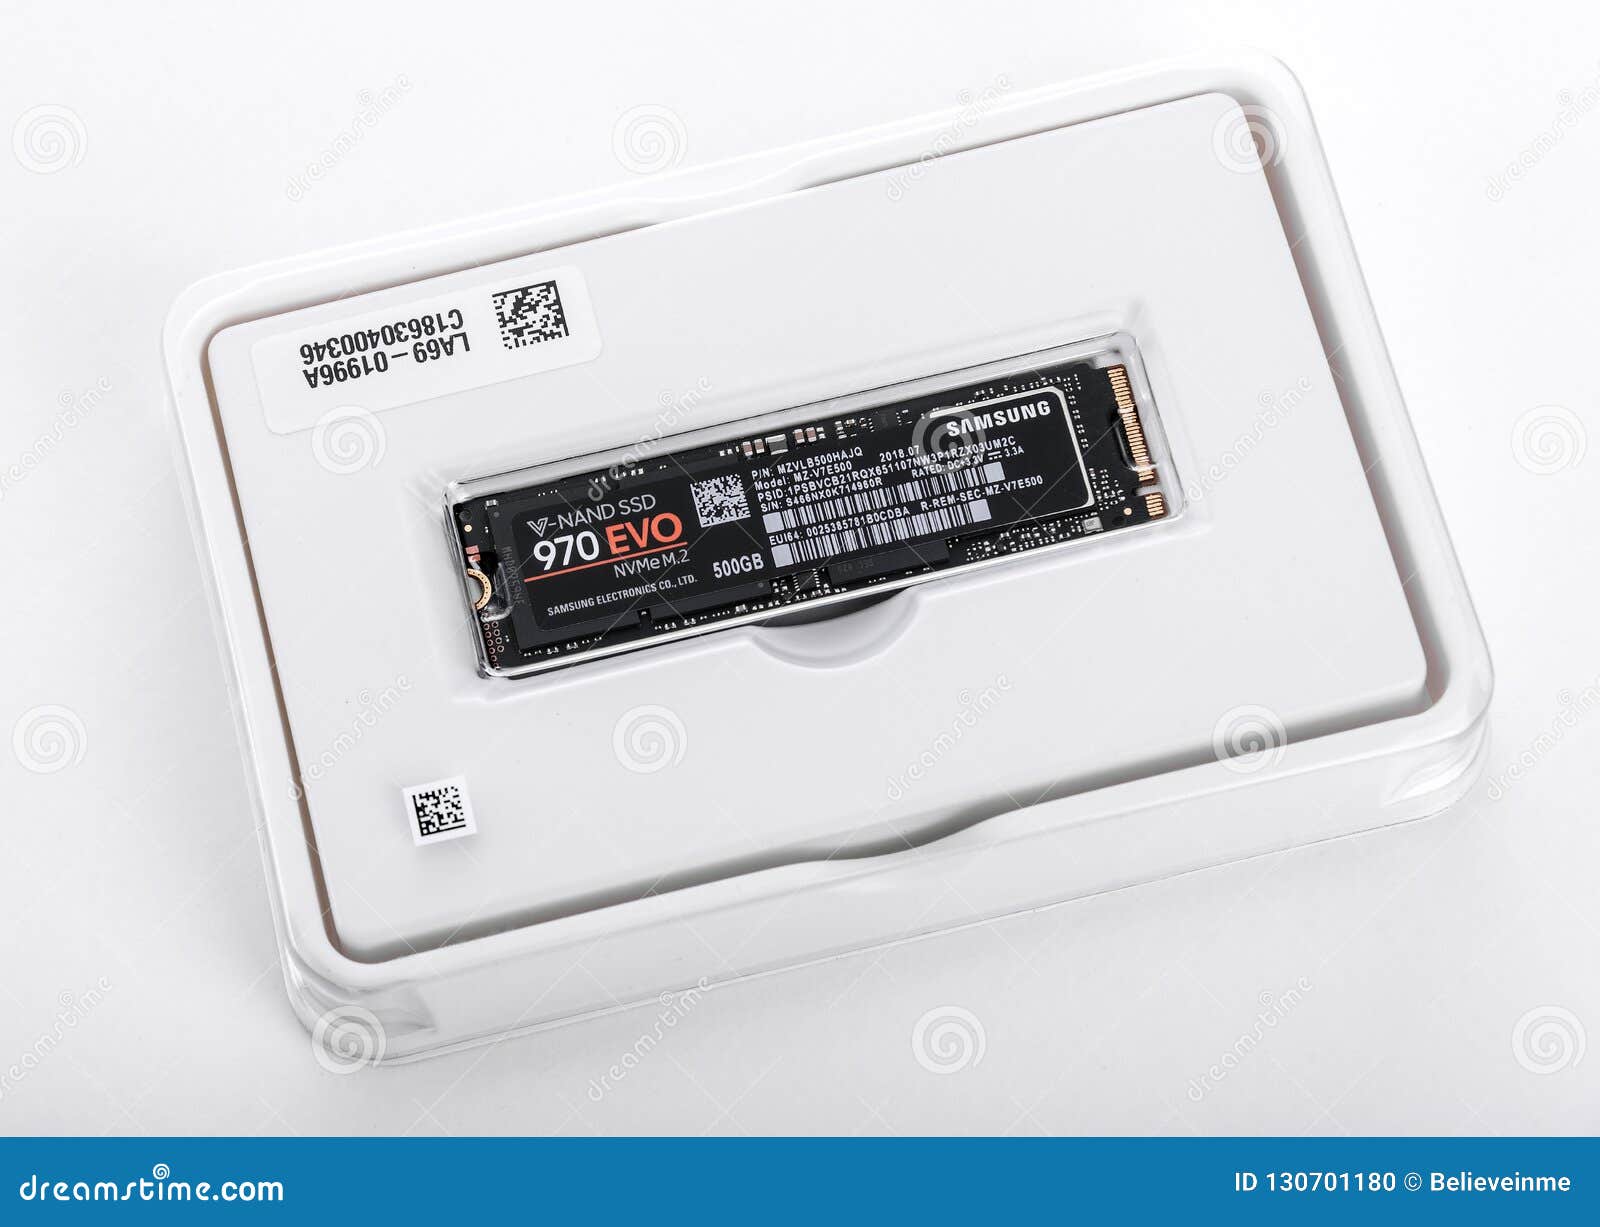 SAMSUNG 970 EVO Plus SSD 2To NVMe M.2 internal BE (P)